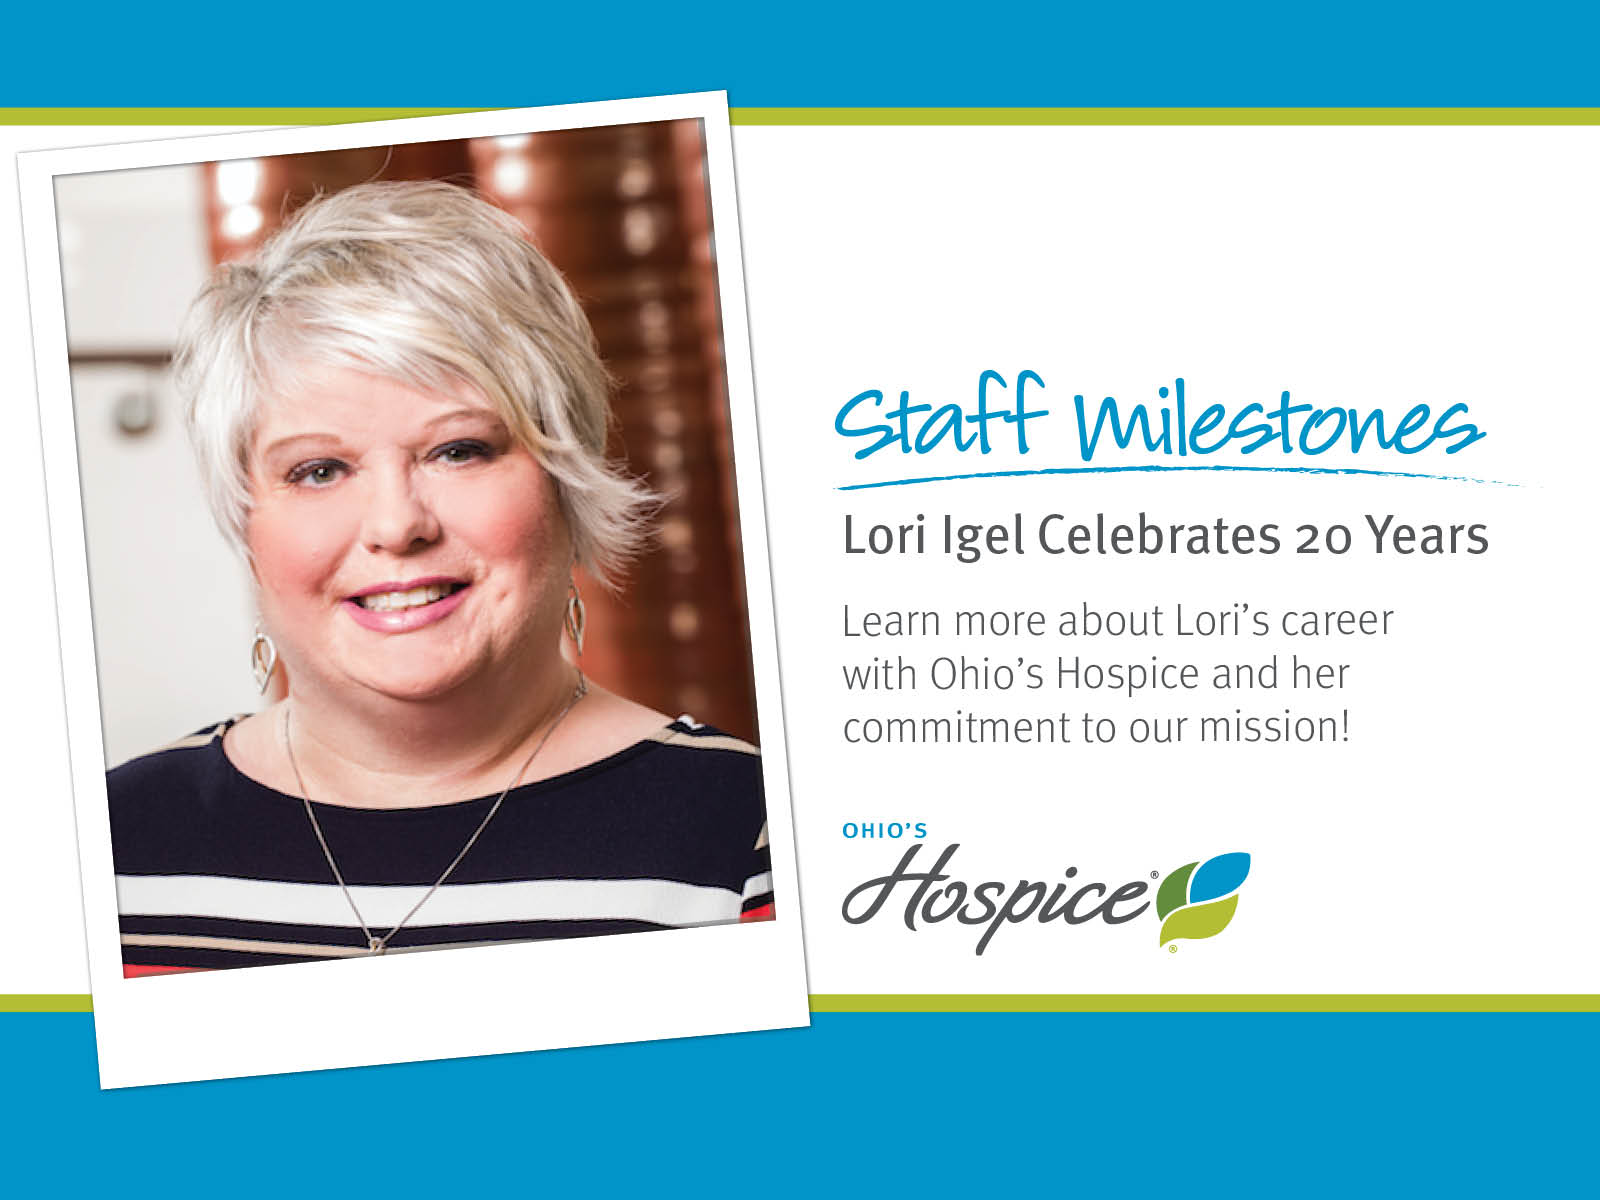 Staff Milestones. Lori Igel celebrates 20 years. Ohio's Hospice